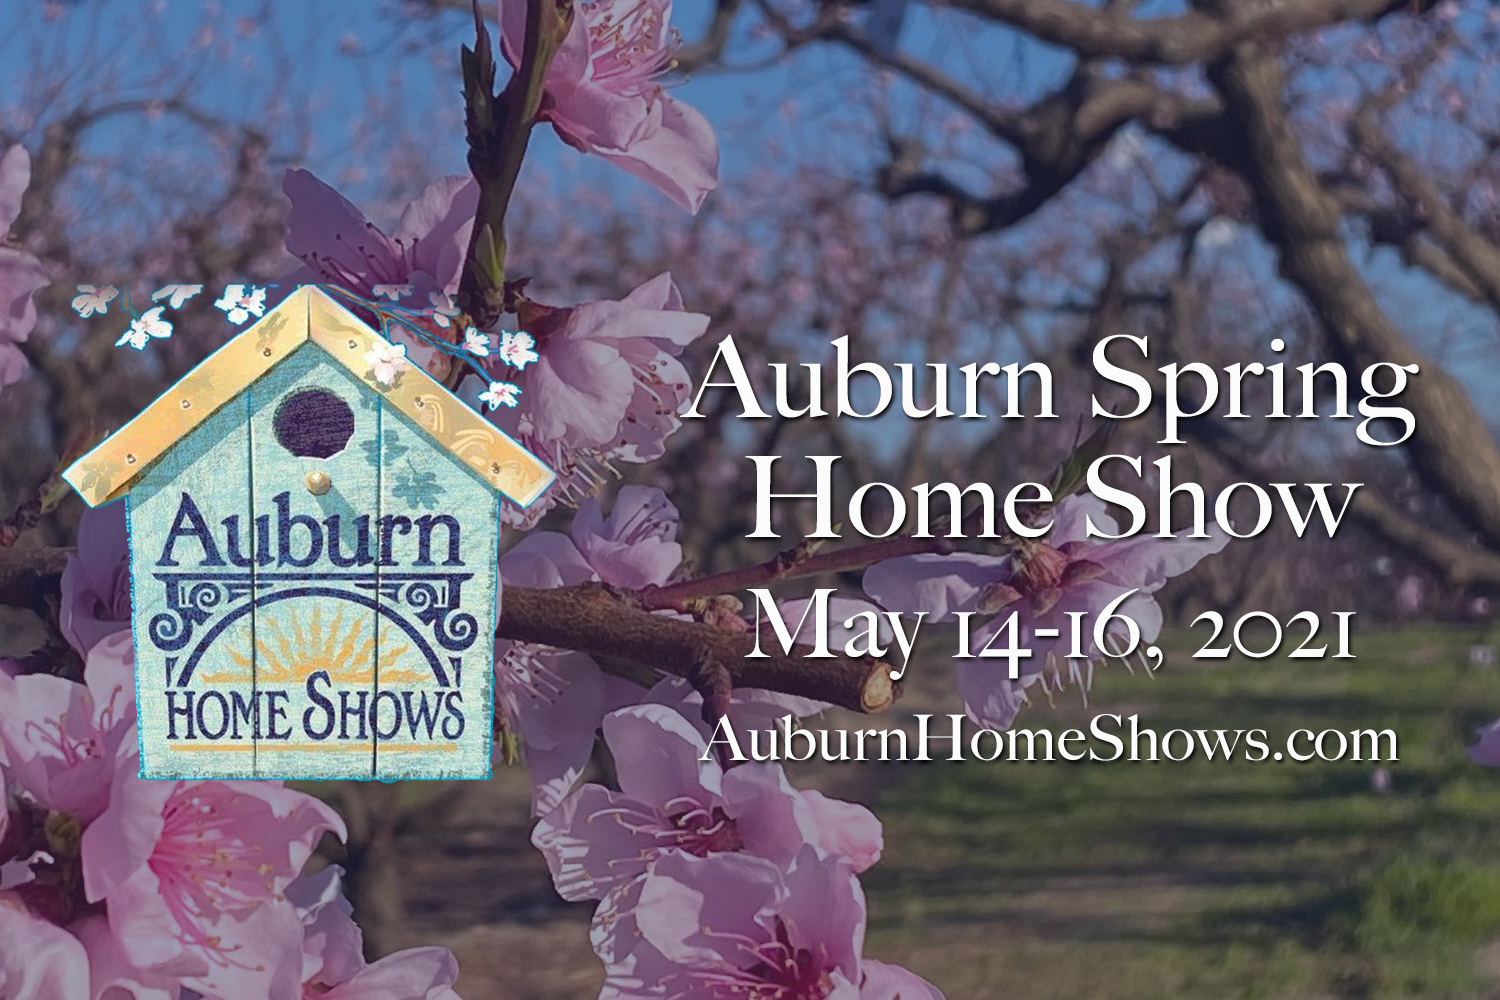 Auburn Spring Home Show